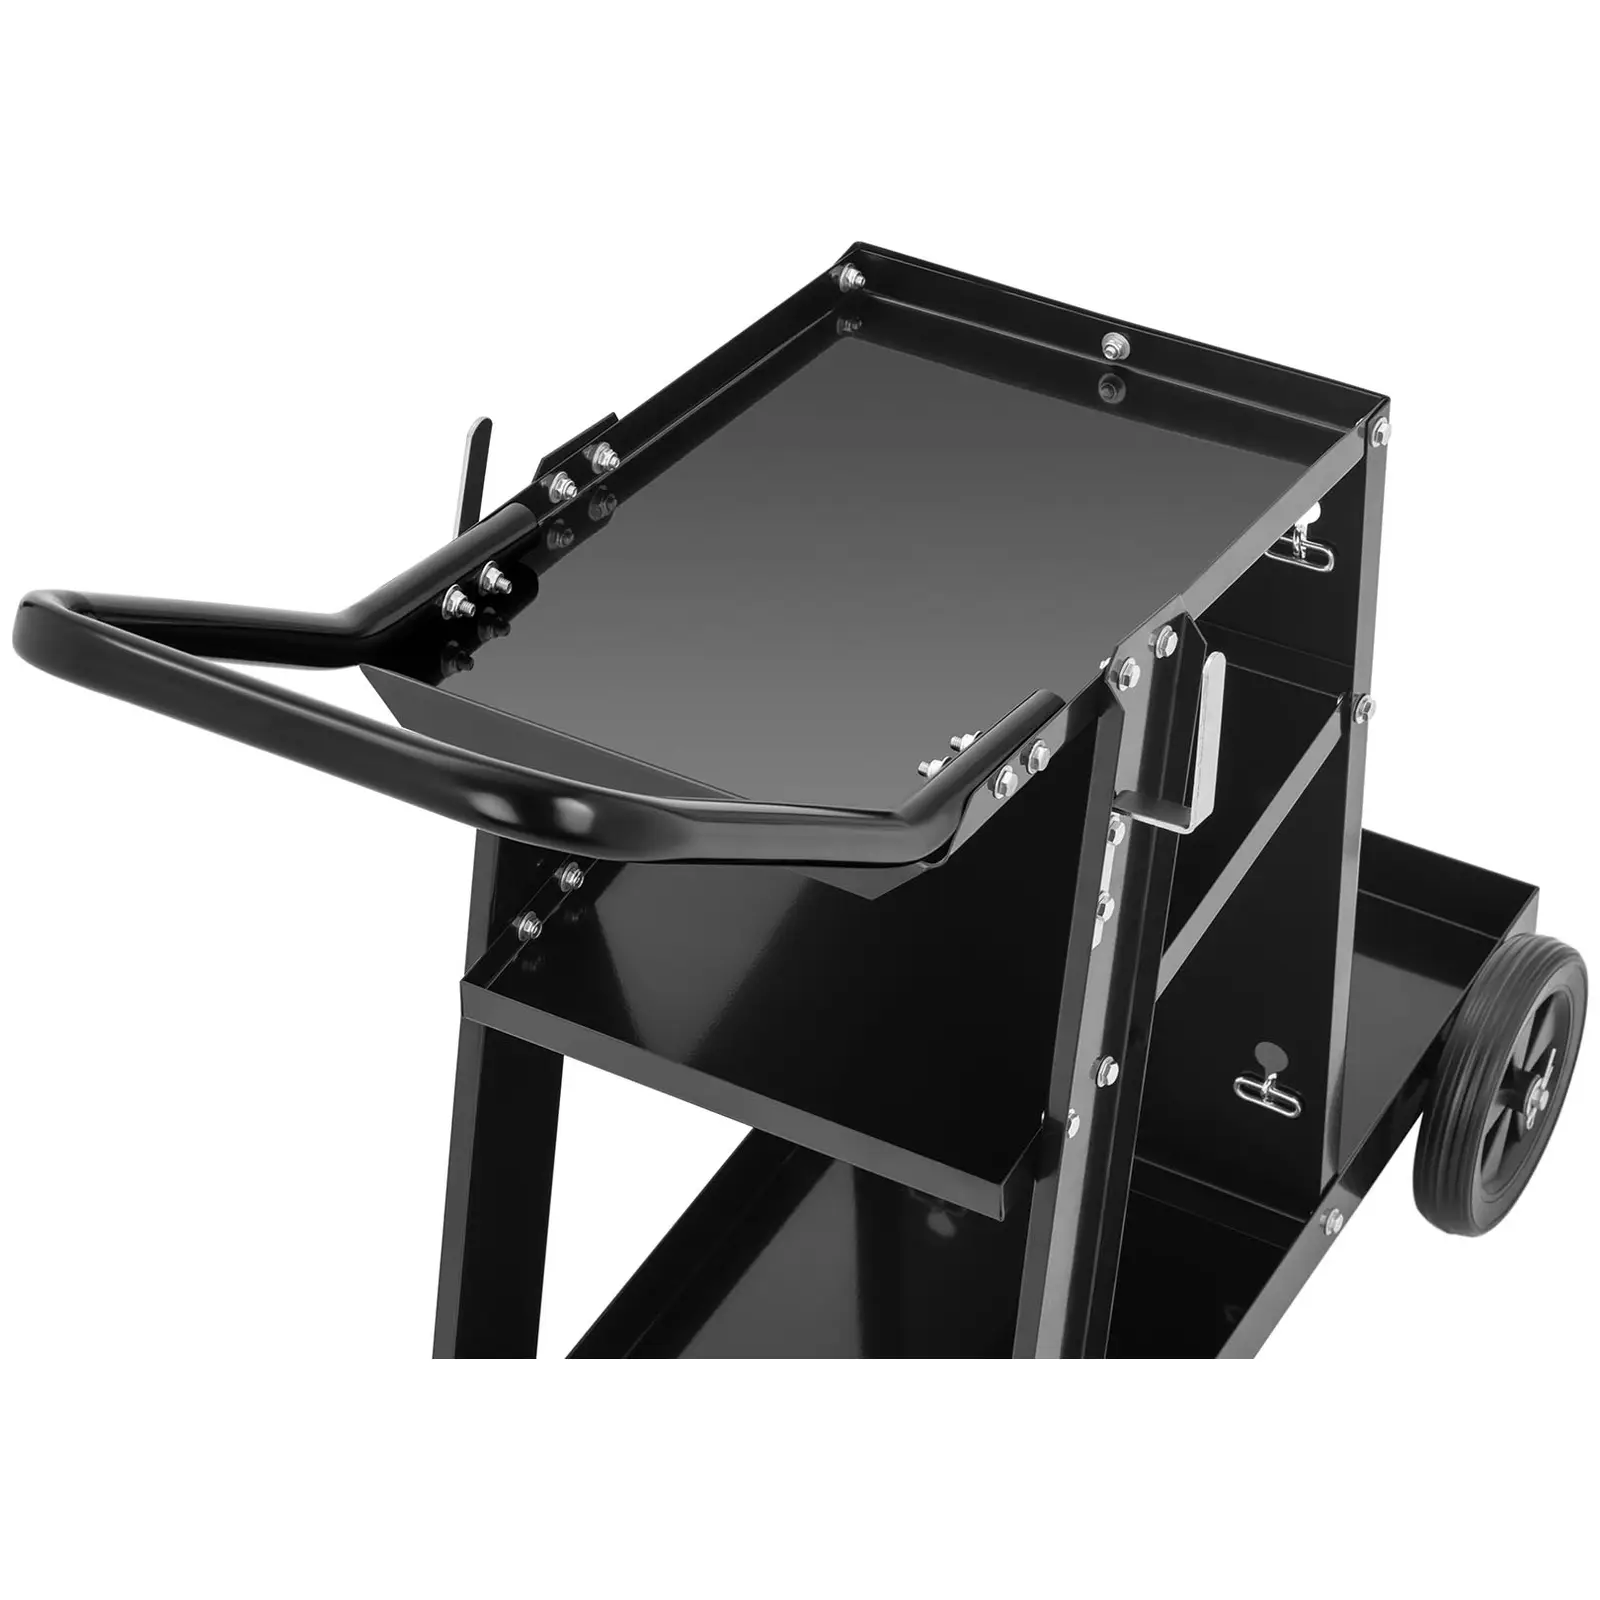 Welding Cart with Handle - 3 shelves - 80 kg